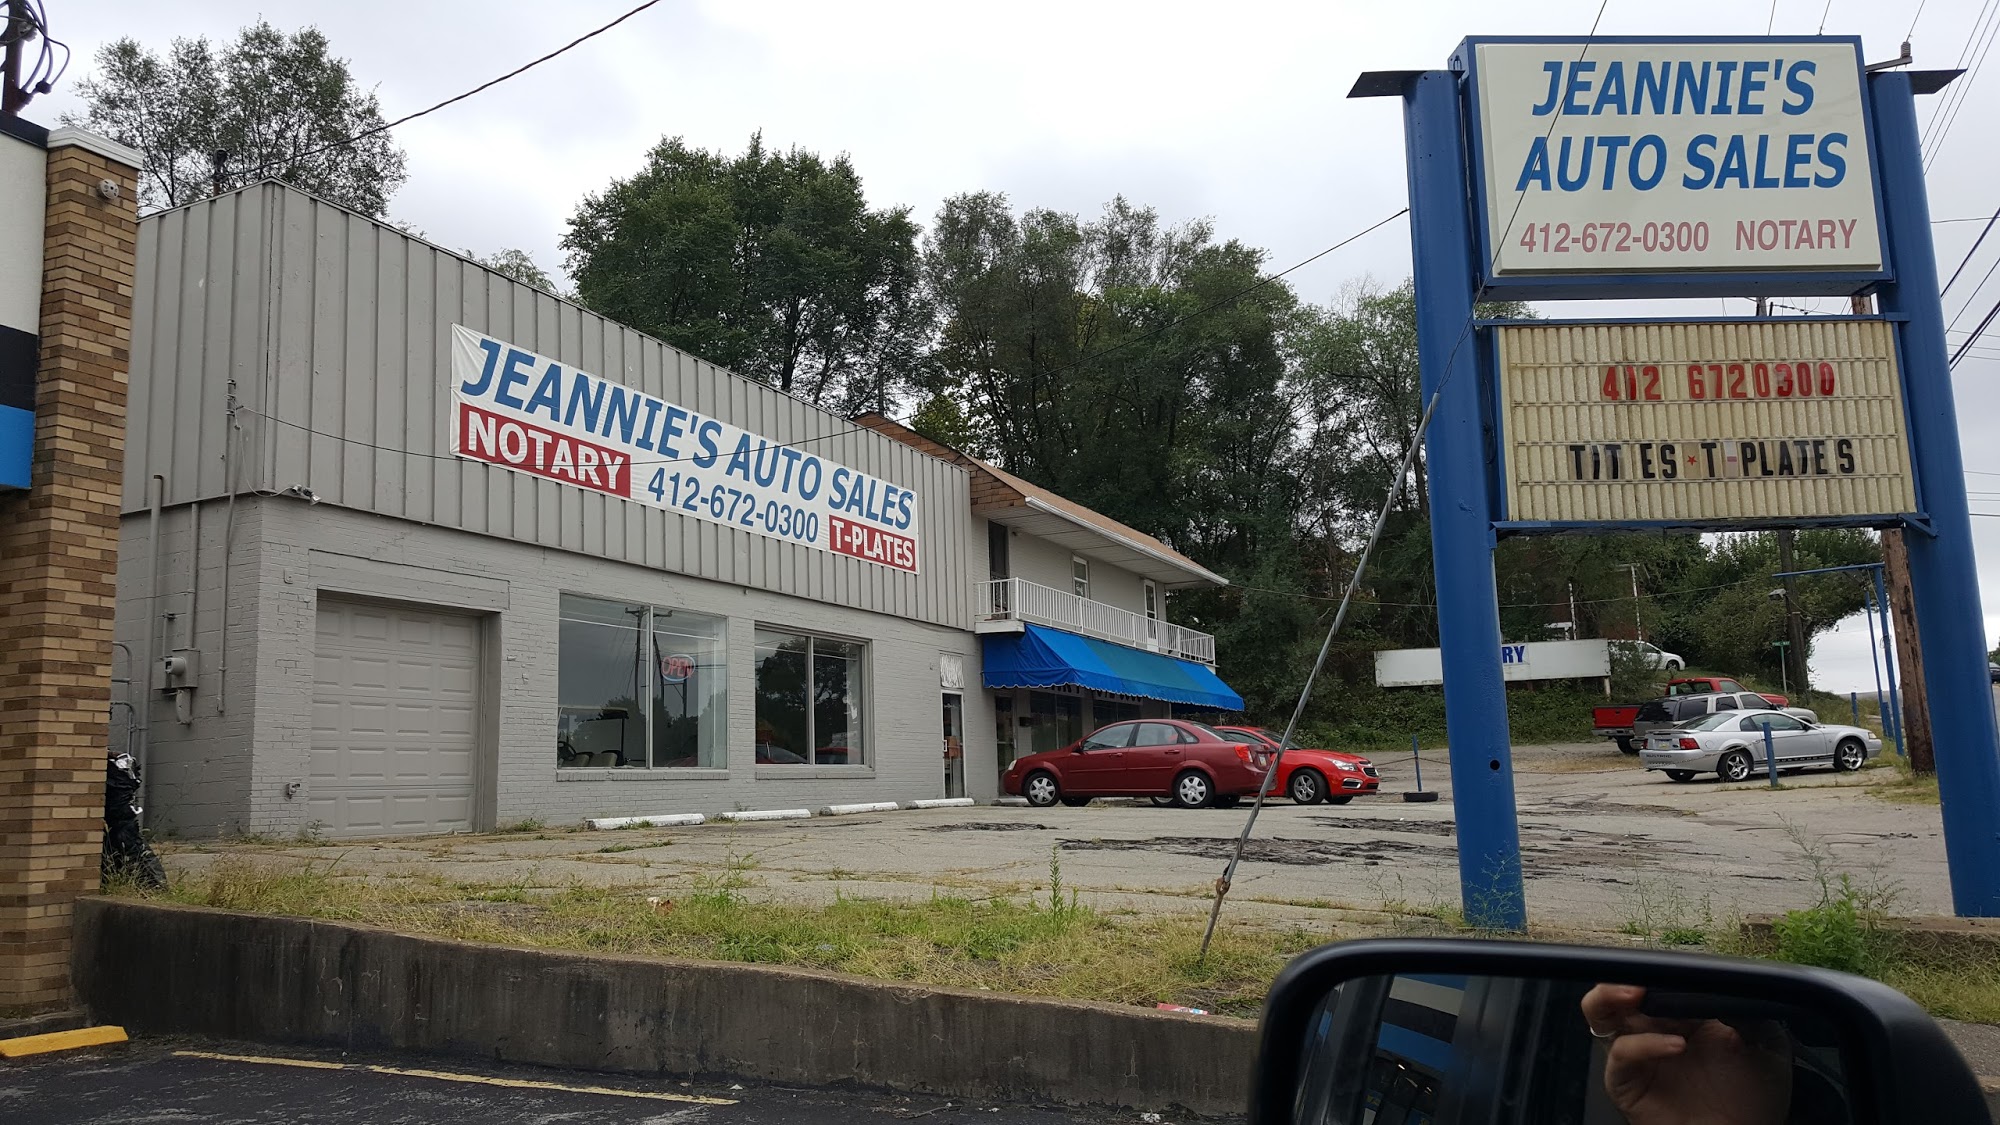 Jeannie's Auto Sales